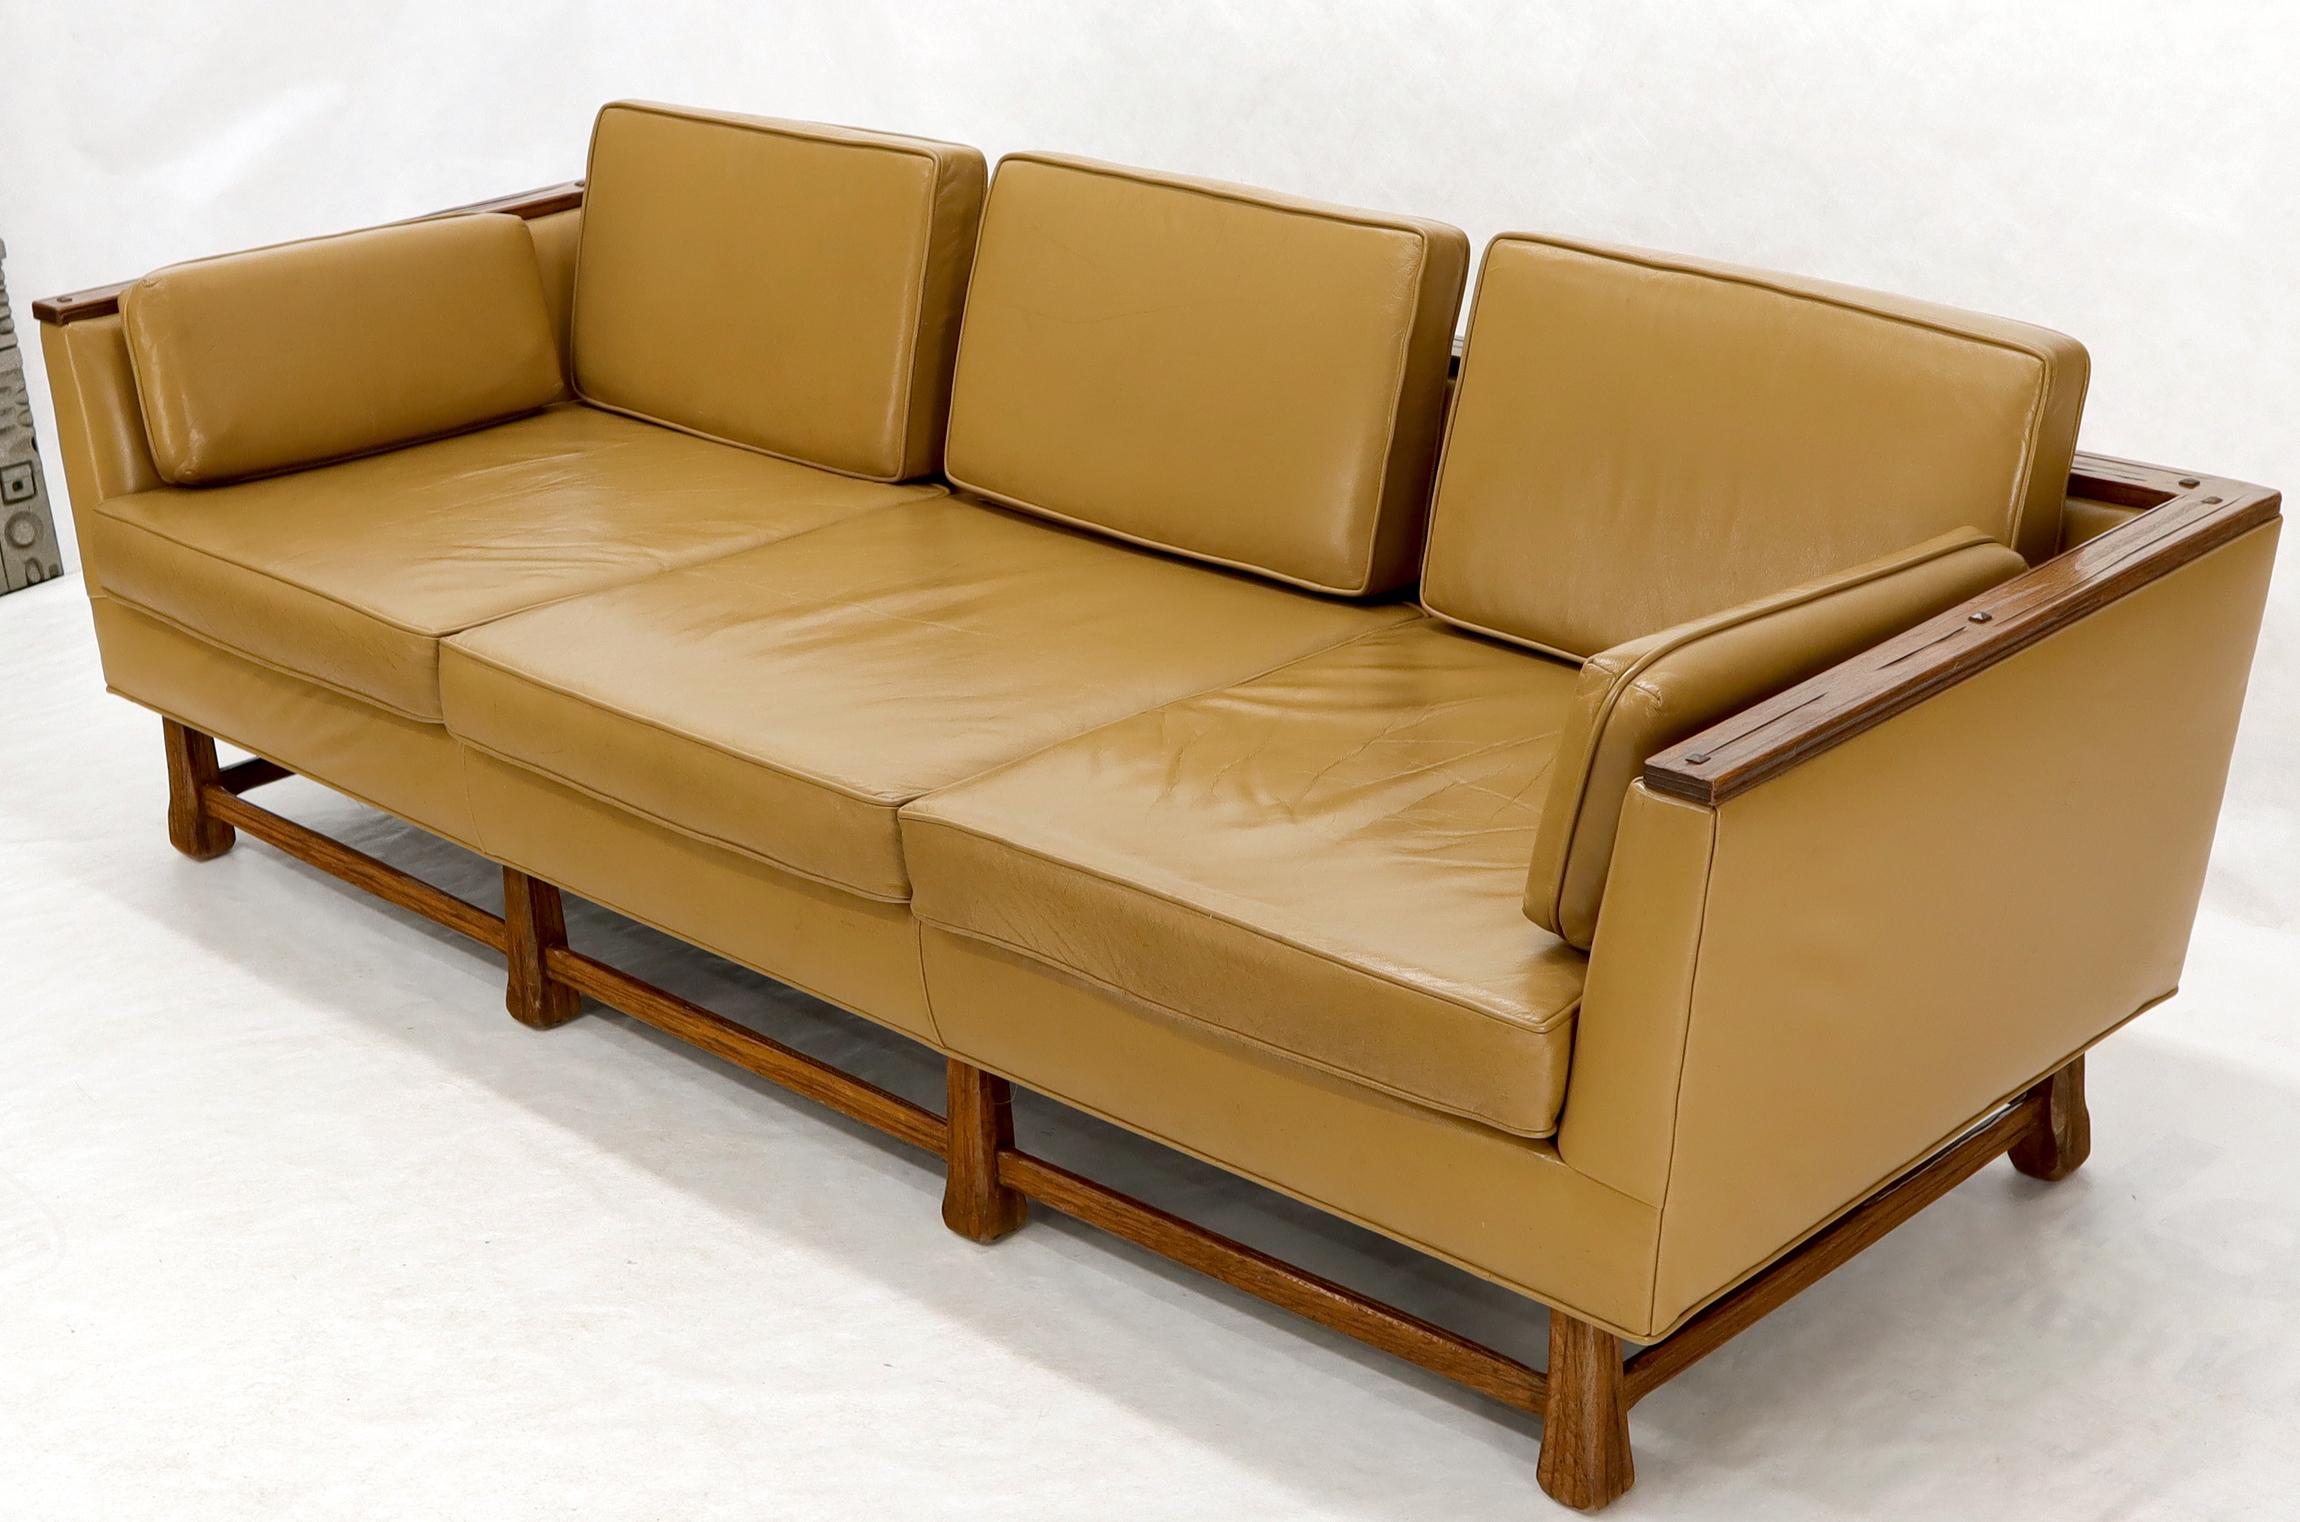 Oak frame tan supple leather upholstery Mid-Century Modern sofa. Artistic adze cut wood finishing technique presence detail.